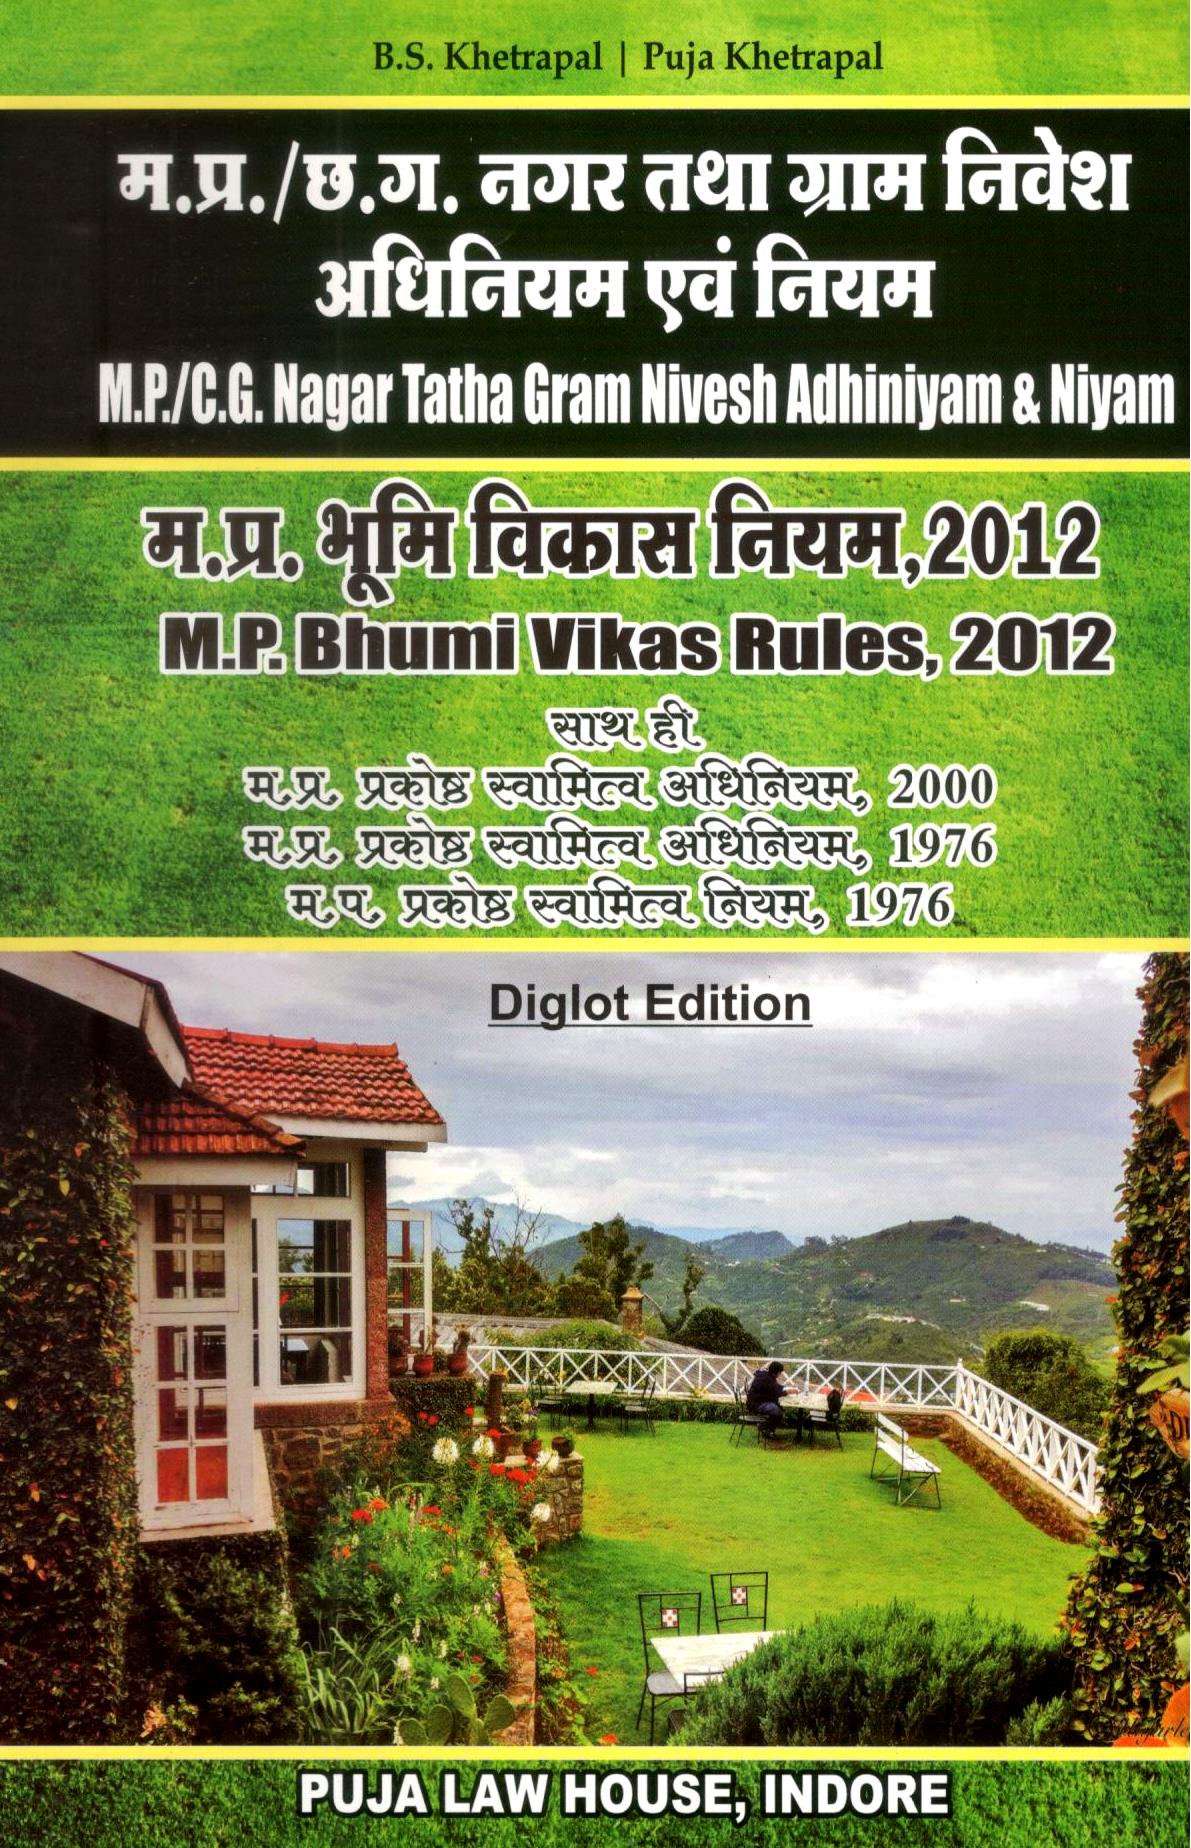  Buy C.G. Nagar Tatha Gram Nivesh Act & Rules with Madhya Pradesh Bhumi Vikas & Madhya Pradesh Prakoshtha Swamitva / छ.ग. नगर तथा ग्राम निवेश अधिनियम, एवं नियम, मध्य प्रदेश भूमि विकास नियम, 2012, मध्य प्रदेश प्रकोष्ठ स्वामित्व